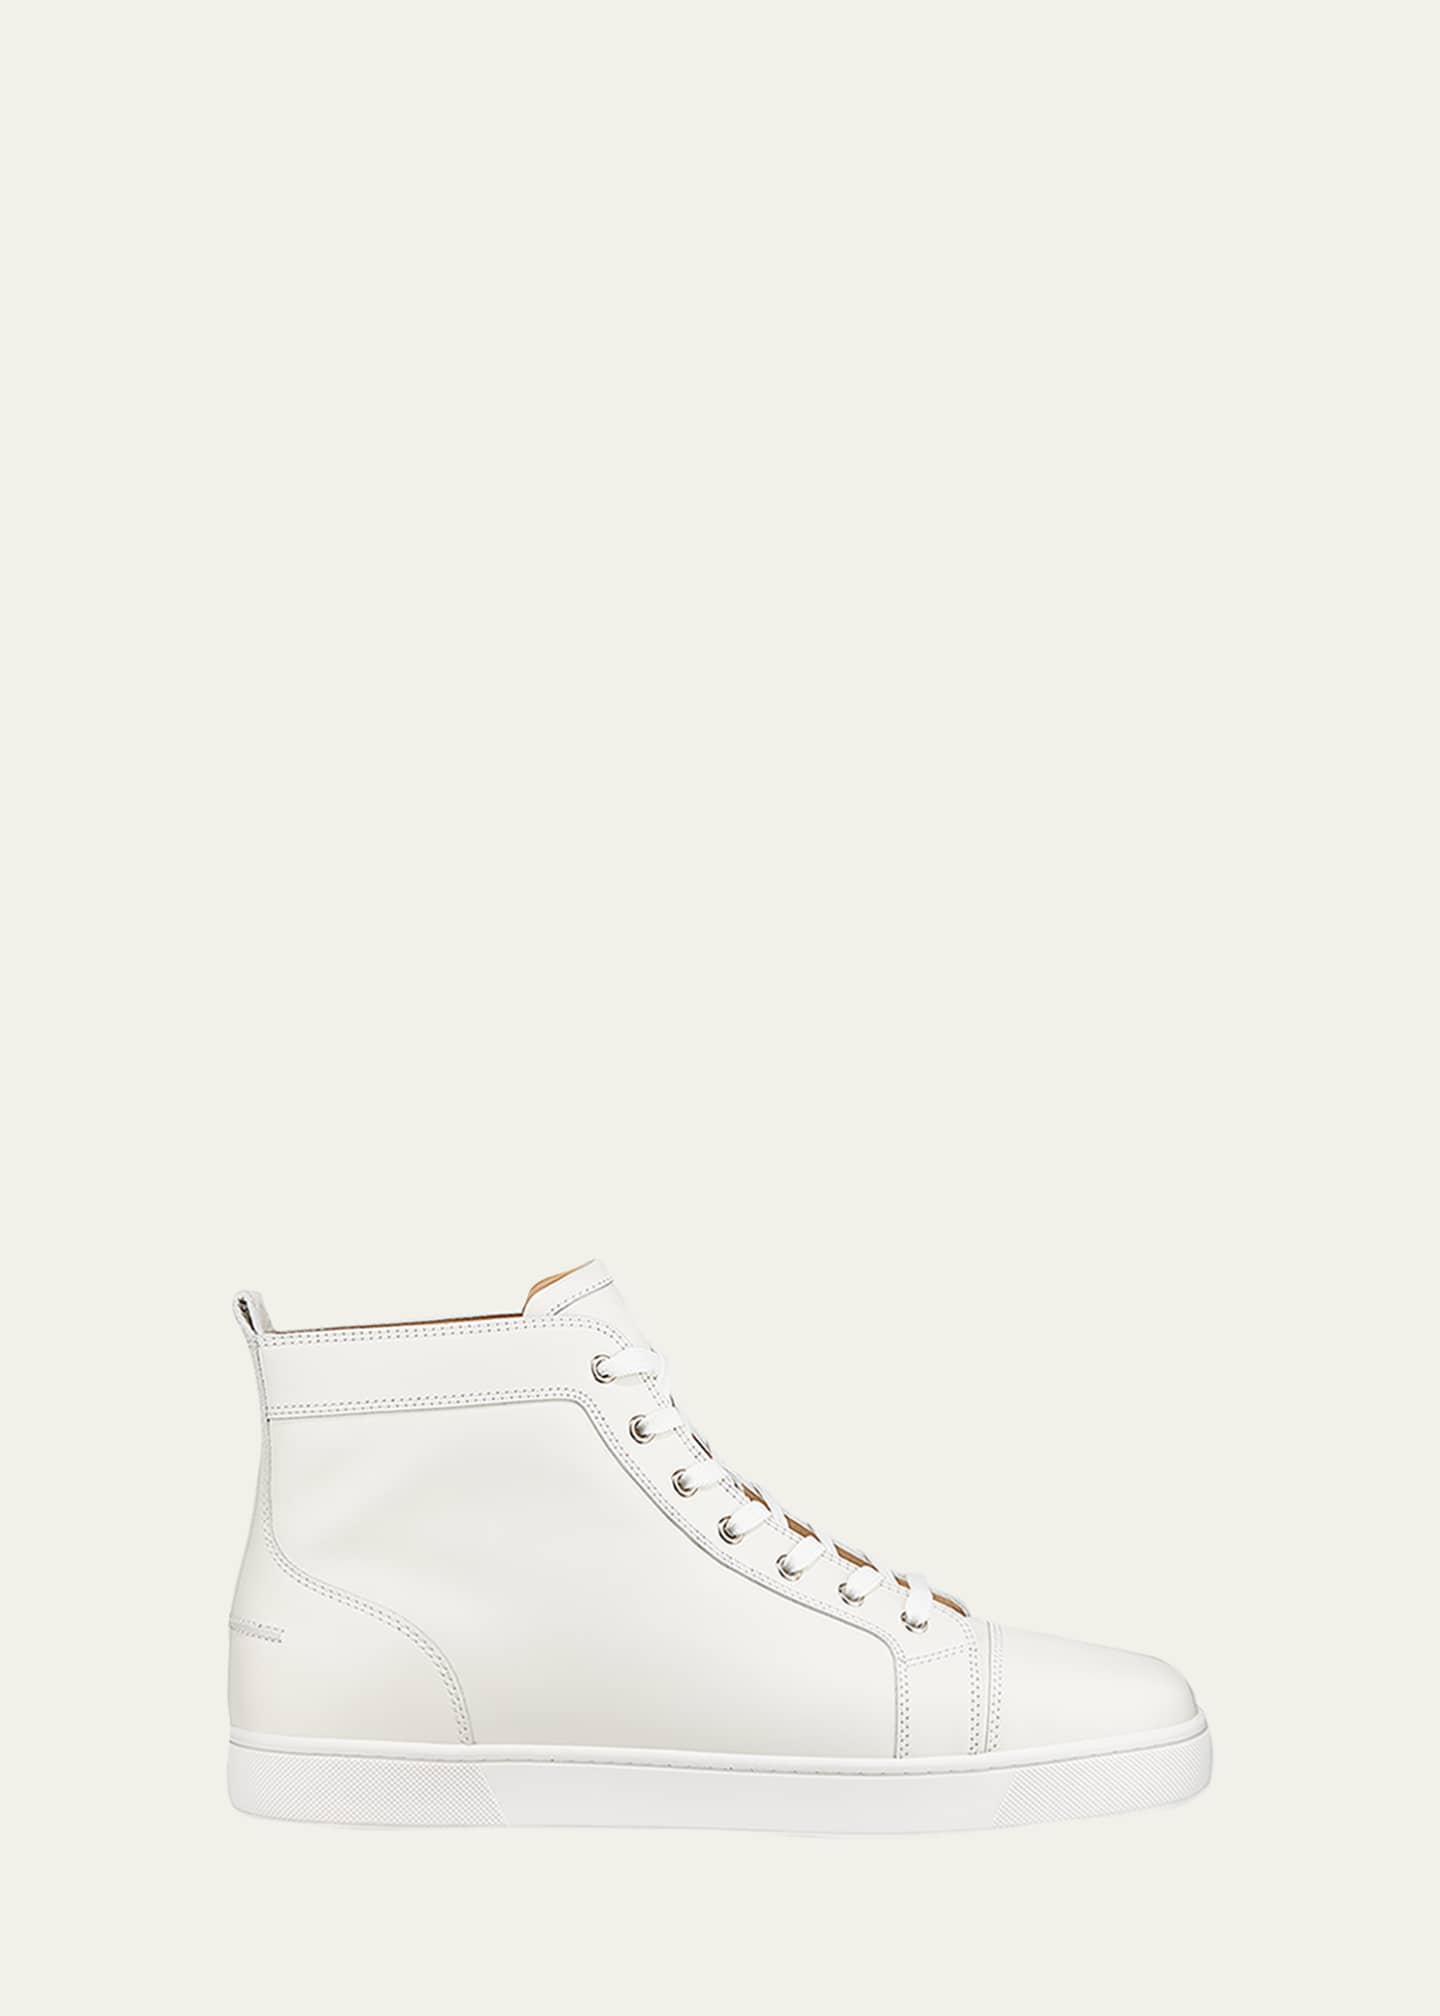 Christian Louboutin Louis White - Mens Shoes - Size 44.5